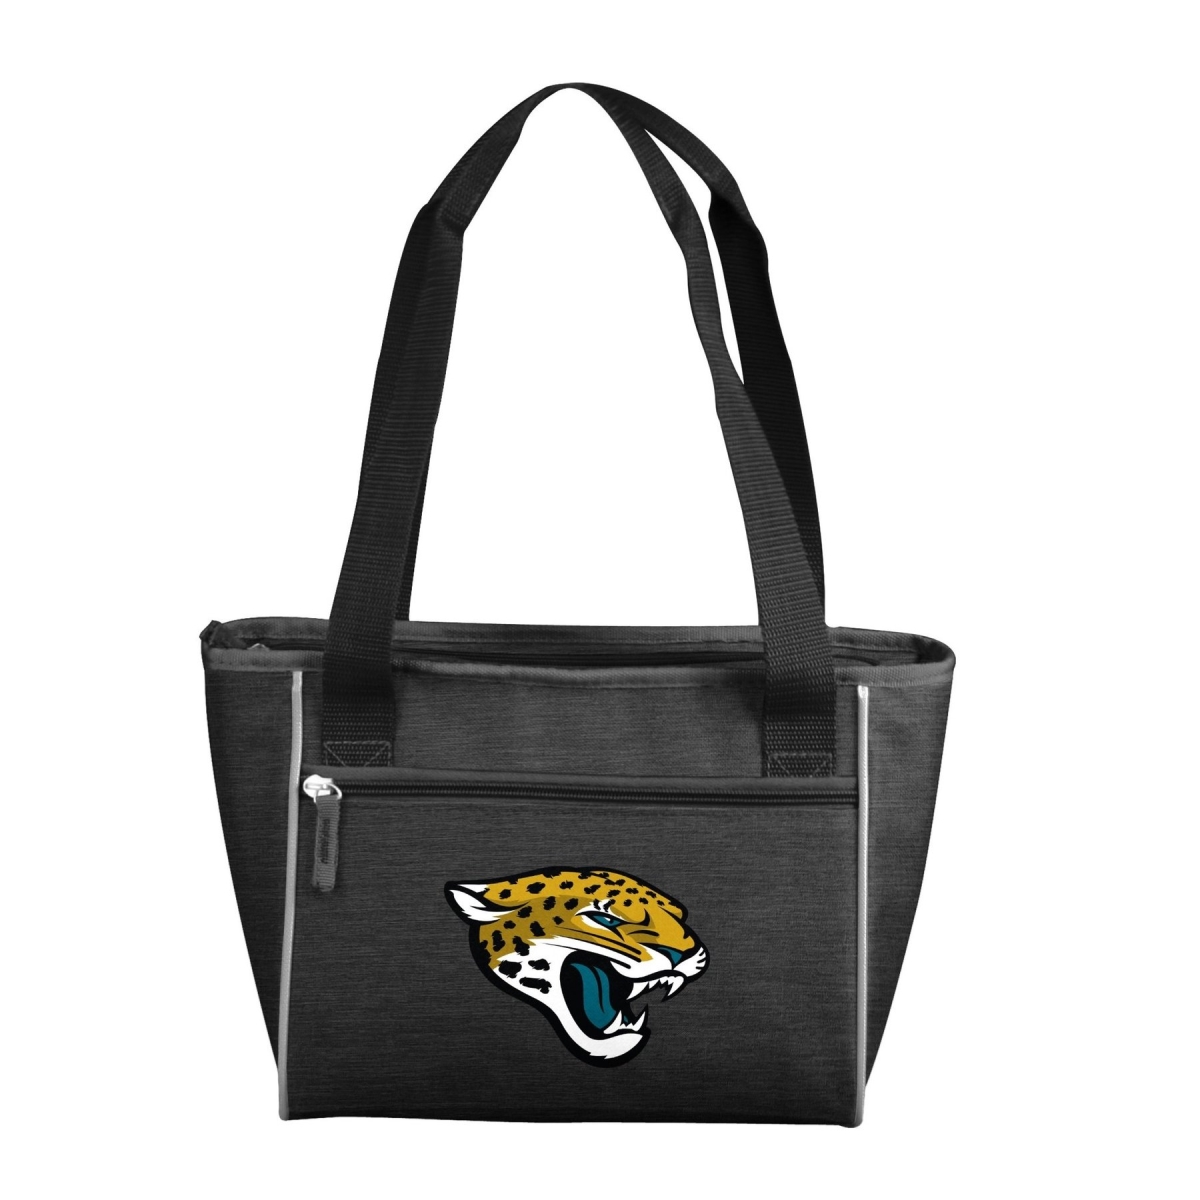 Picture of Logo Chair 615-83-CR1 NFL Jacksonville Jaguars Crosshatch Cooler Tote Bag Holds for 16 Cans